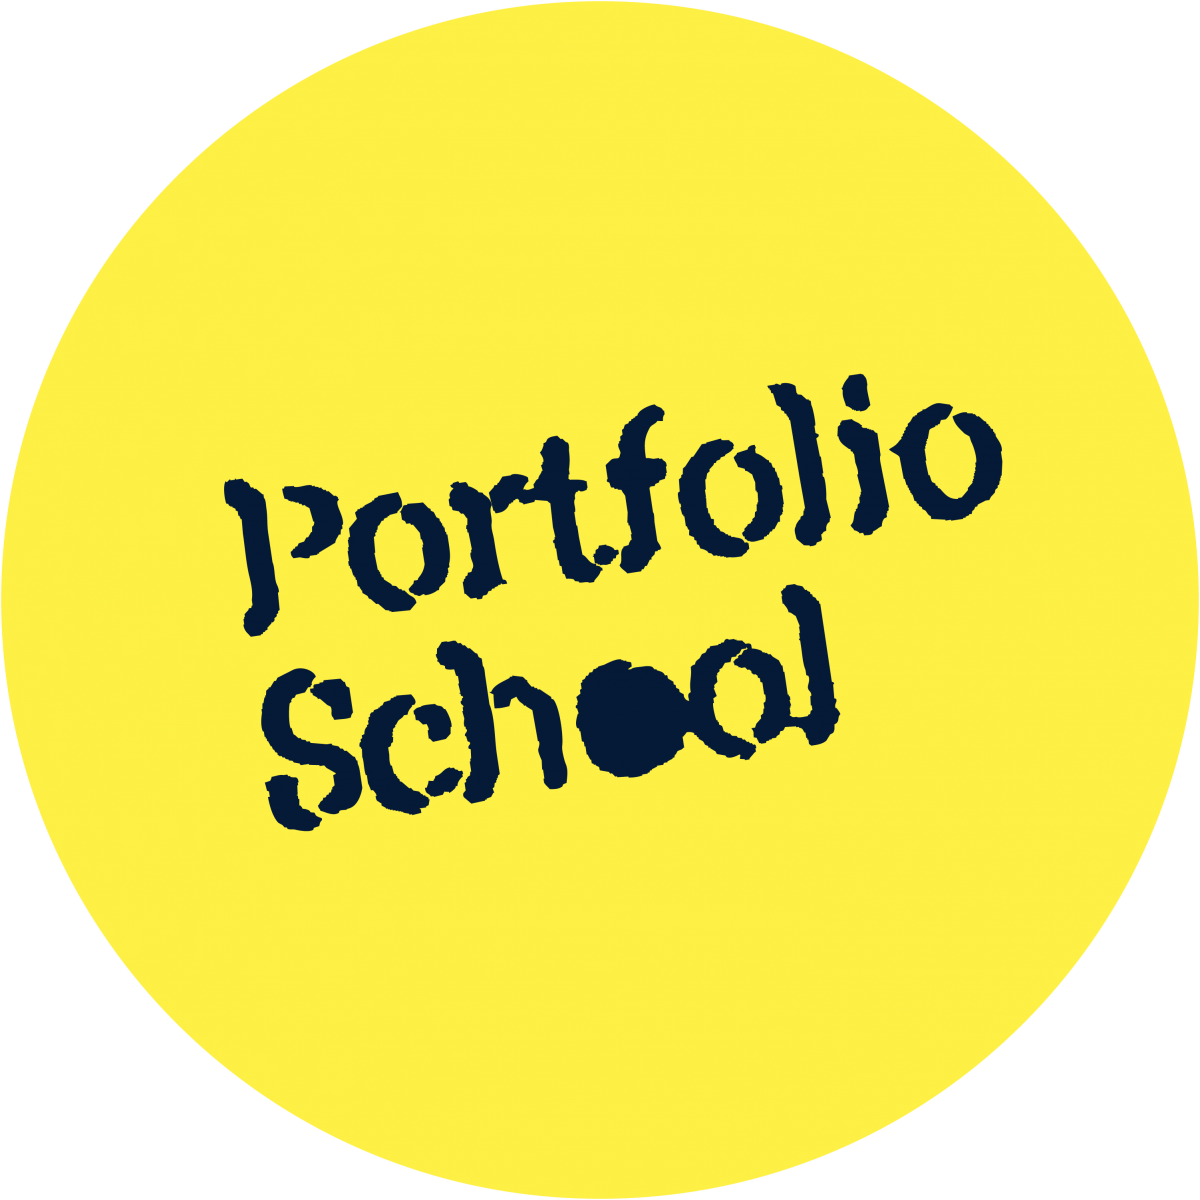 The Portfolio School